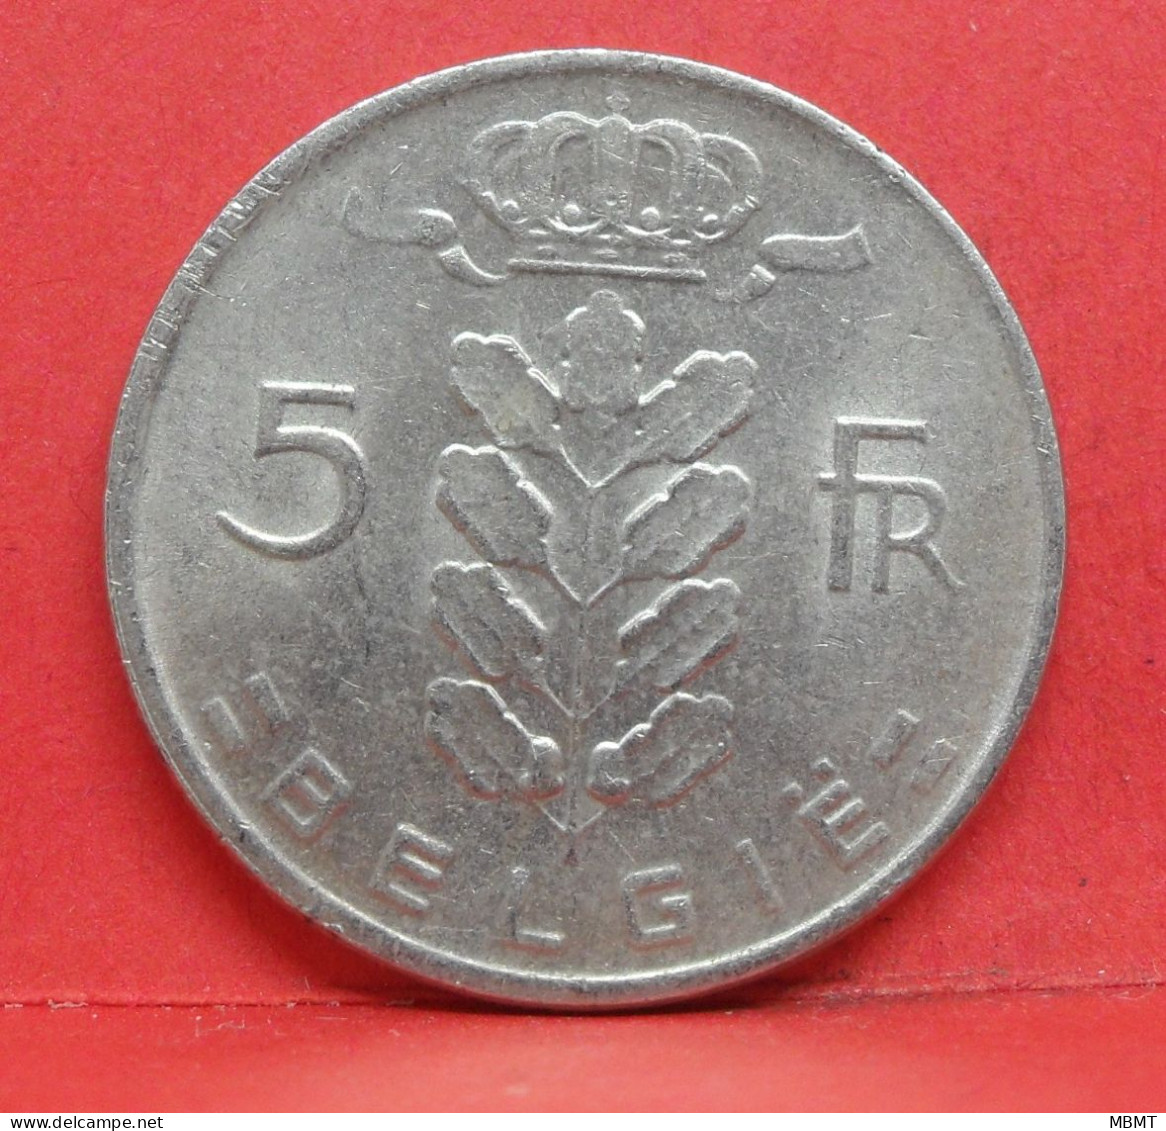 5 Frank 1966 - TTB - Pièce Monnaie Belgie - Article N°1988 - 5 Frank